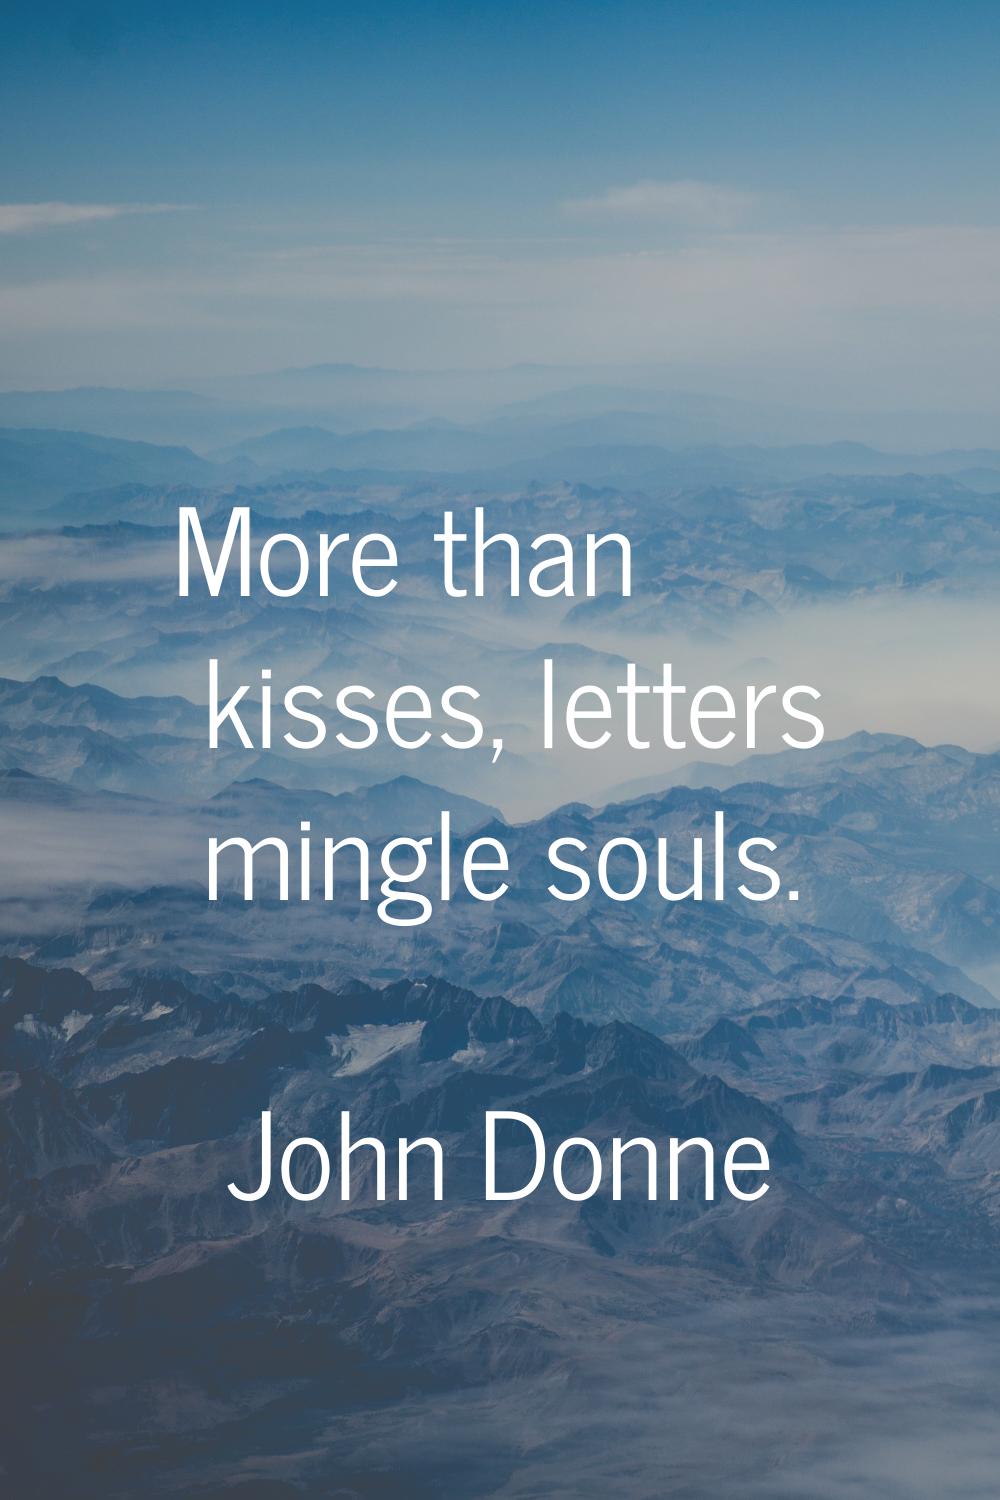 More than kisses, letters mingle souls.